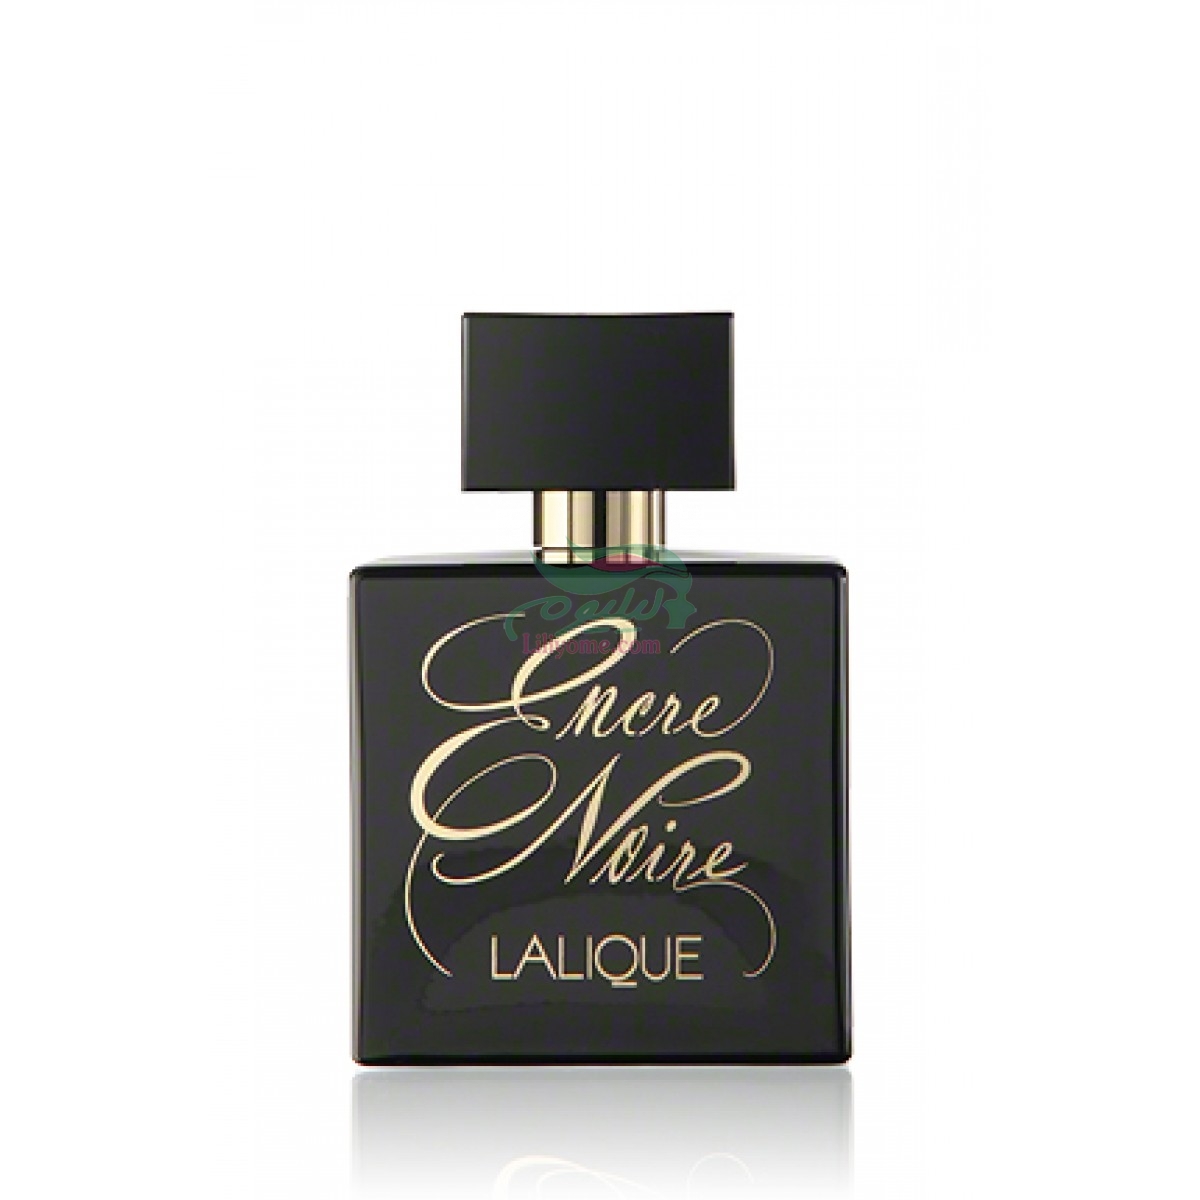  عطر ادکلن لالیک مشکی انکر نویر   Lalique Encre Noire Pour Elle.jpg